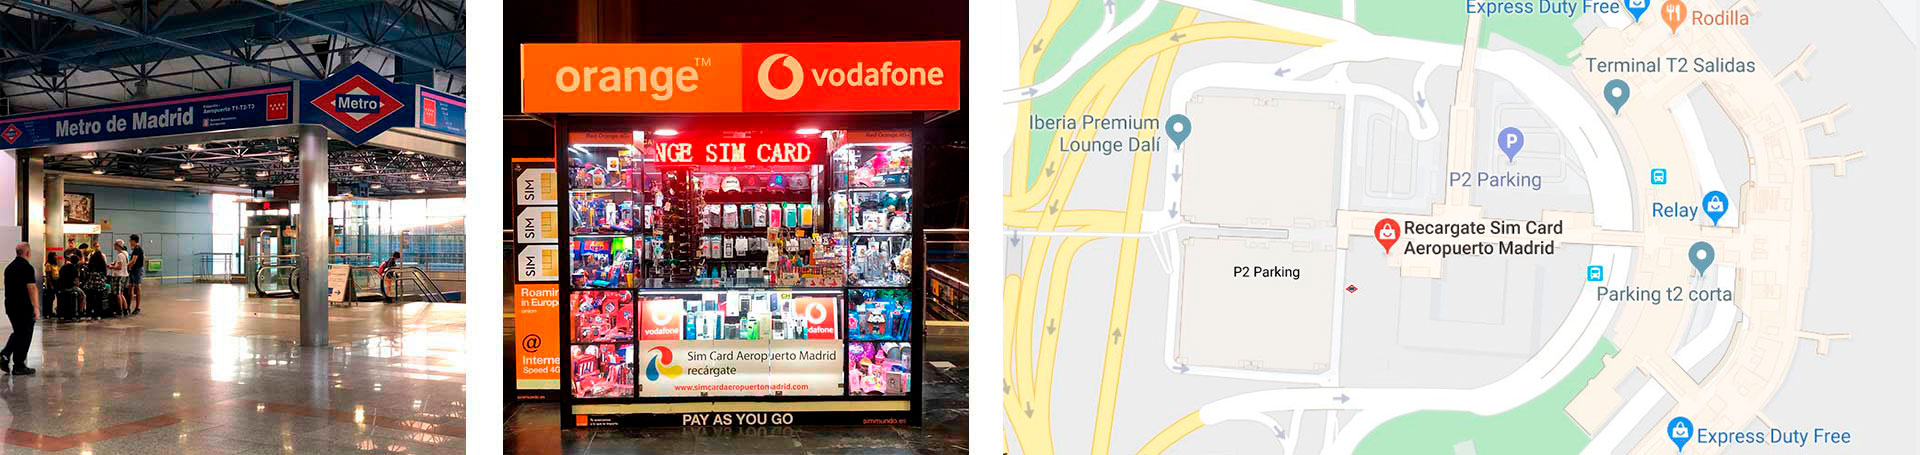 Top up mobile phone credit Sim Cards at Madrid’s Airport